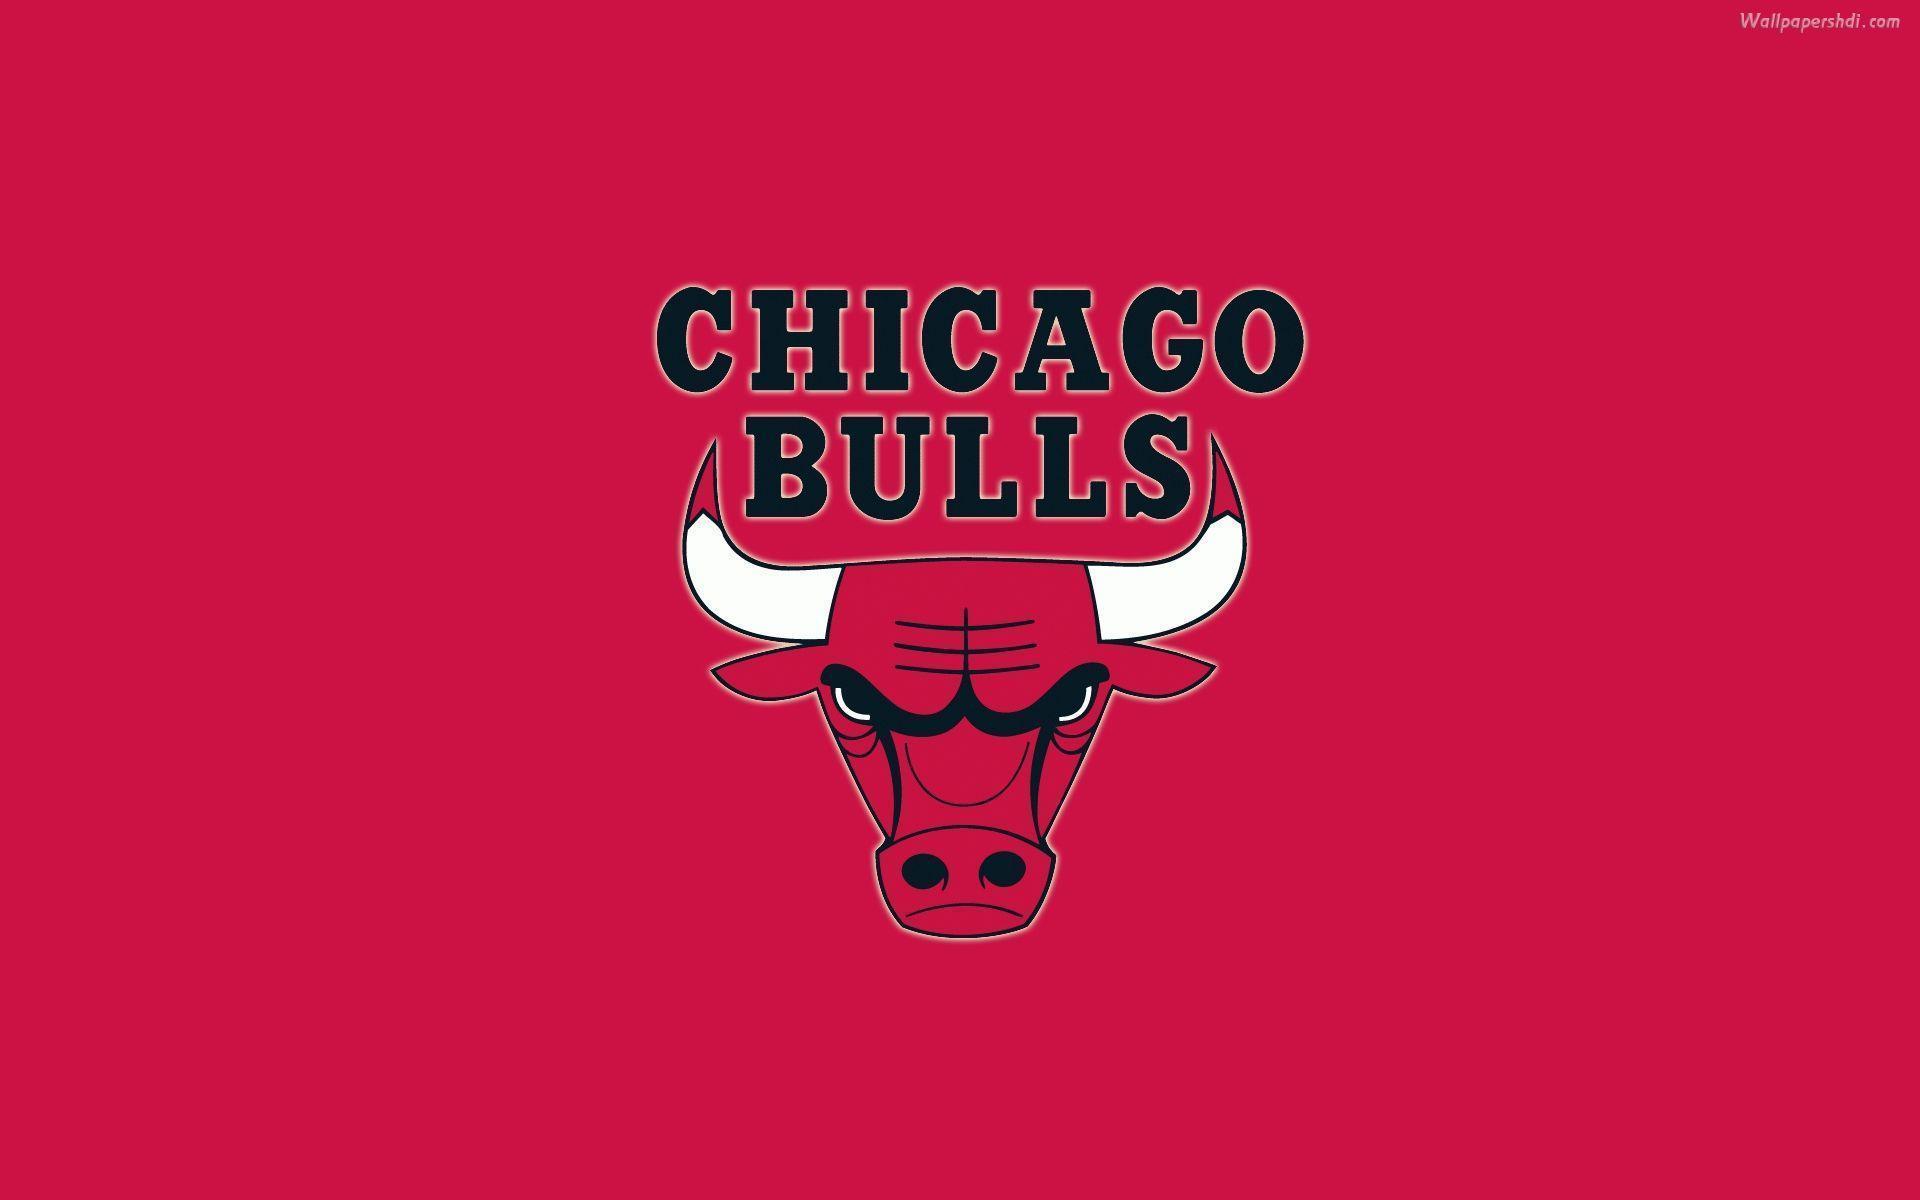 Chicago Bulls Logo Wallpaper Tumblr 2 Download. Wallpaperiz